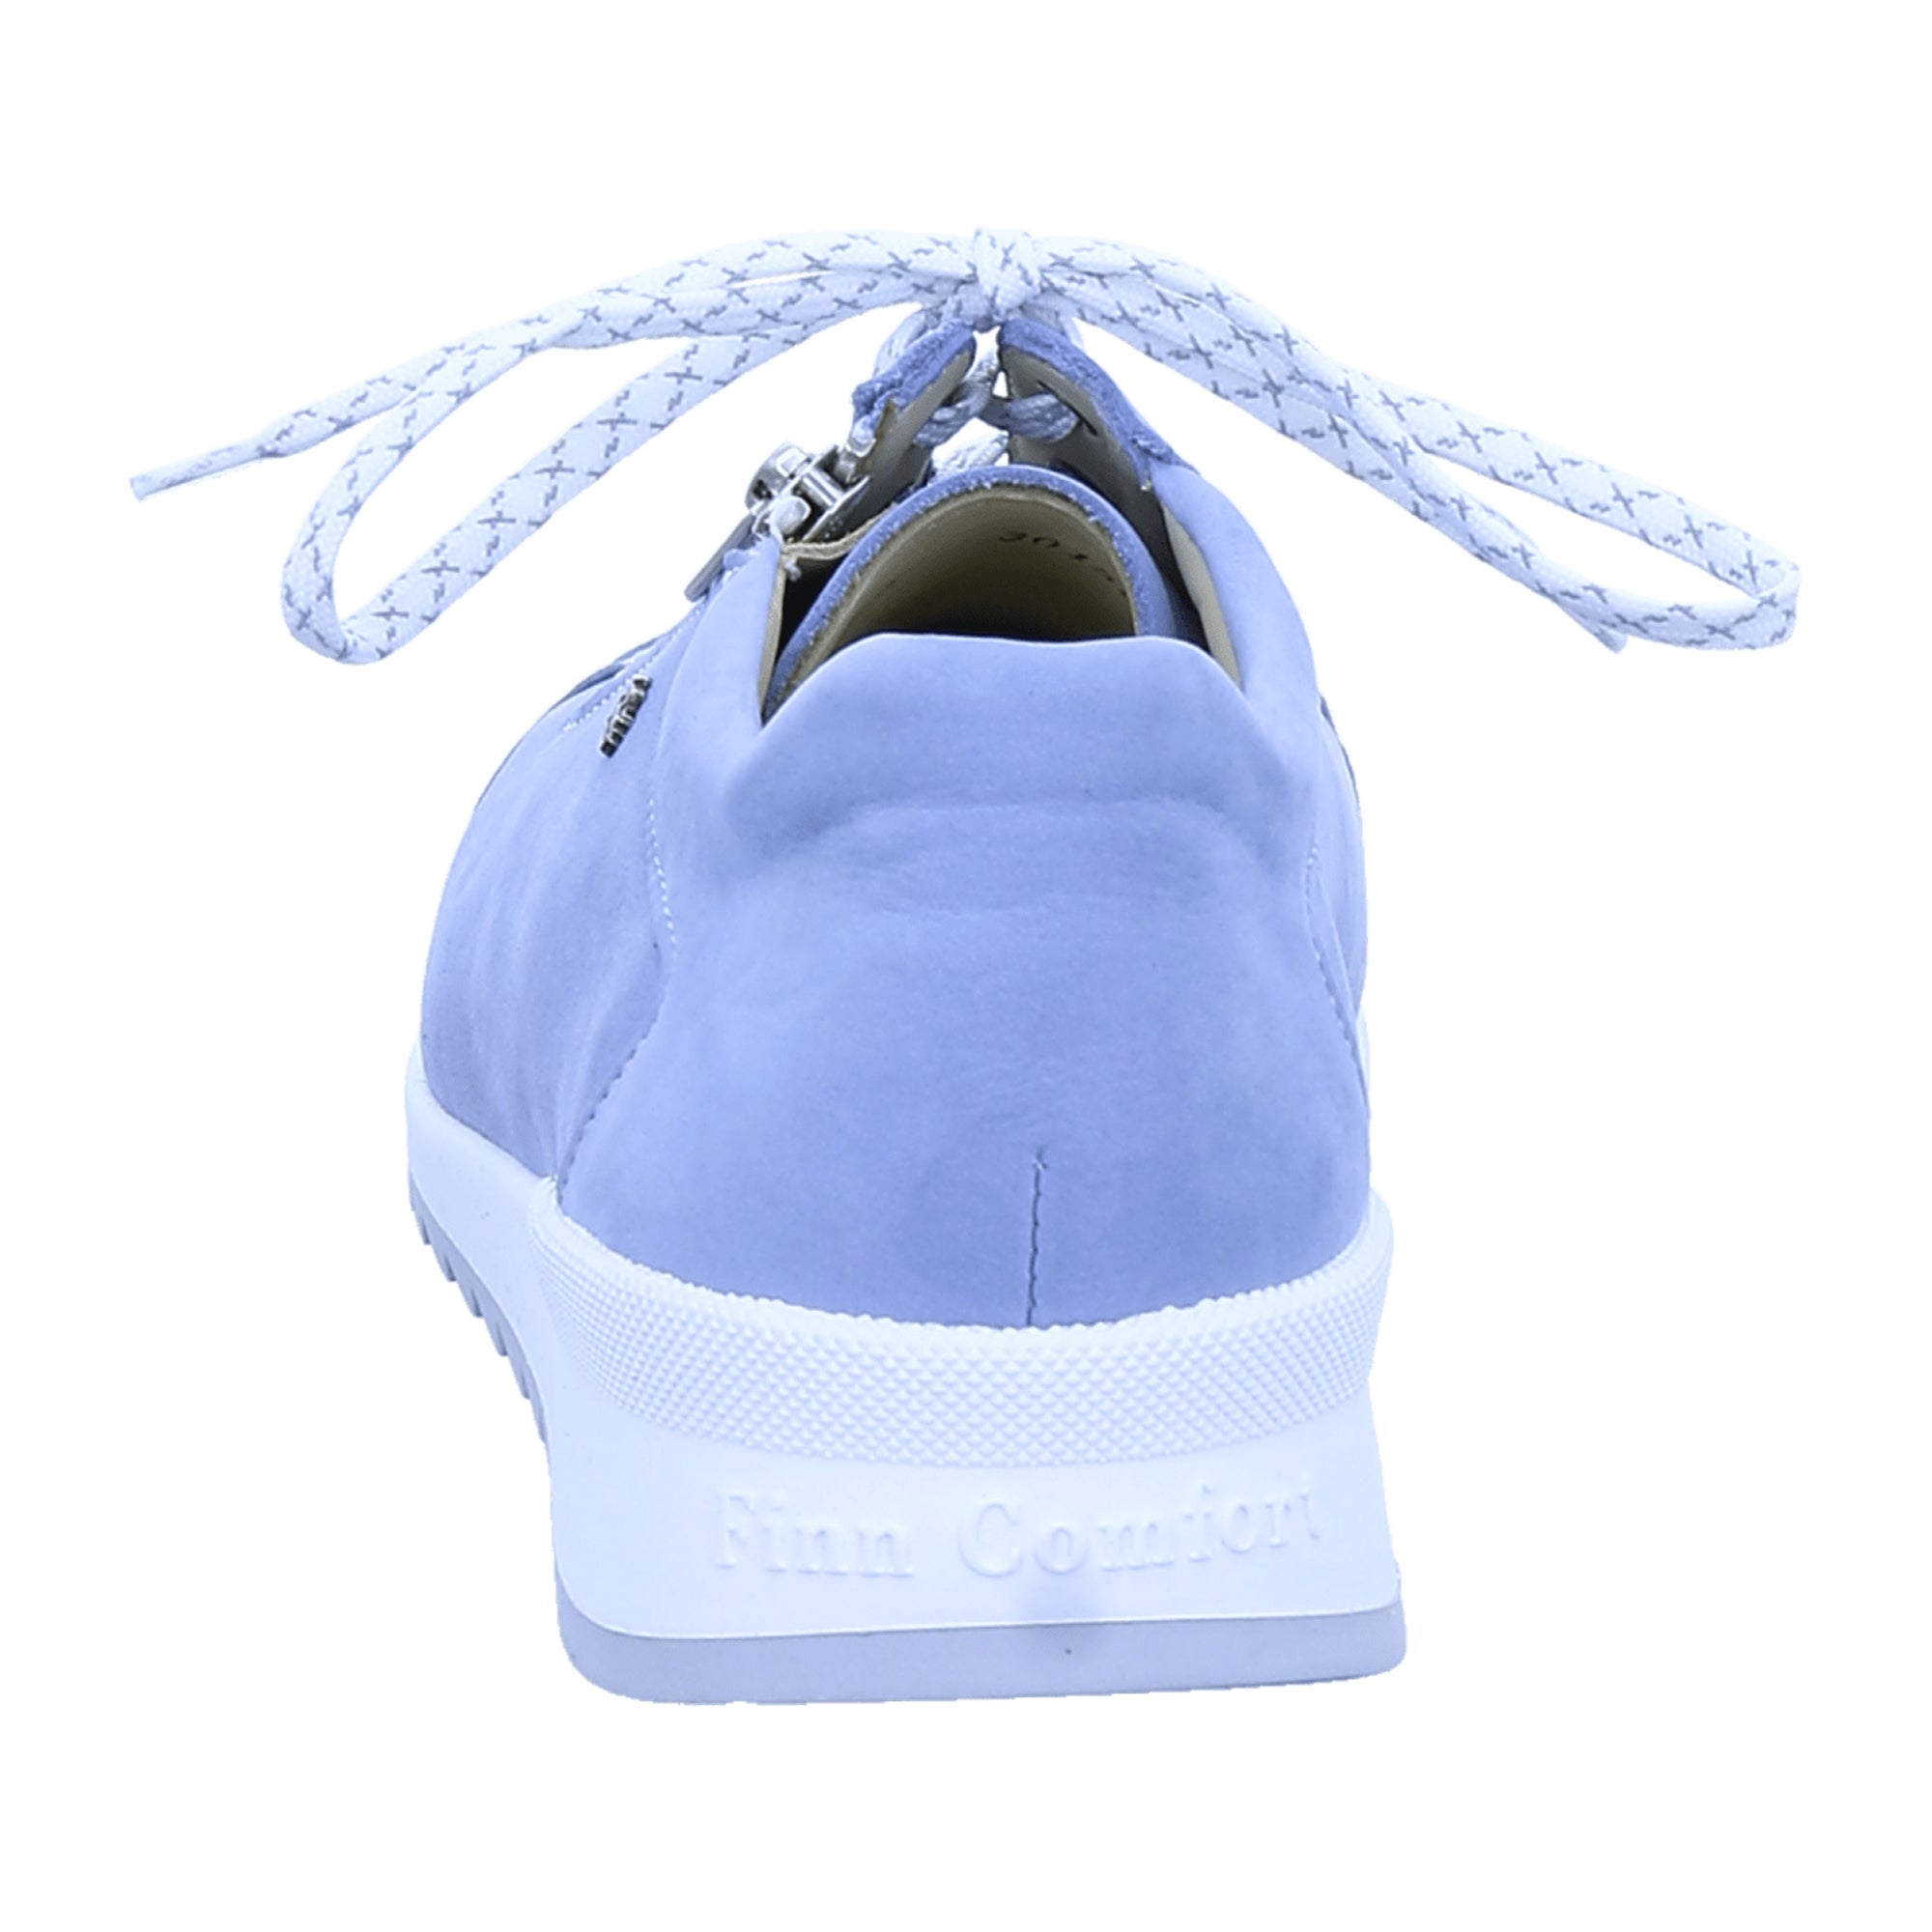 Finn Comfort Barretos Sky Women's Comfort Sneakers, Blue - Stylish & Durable